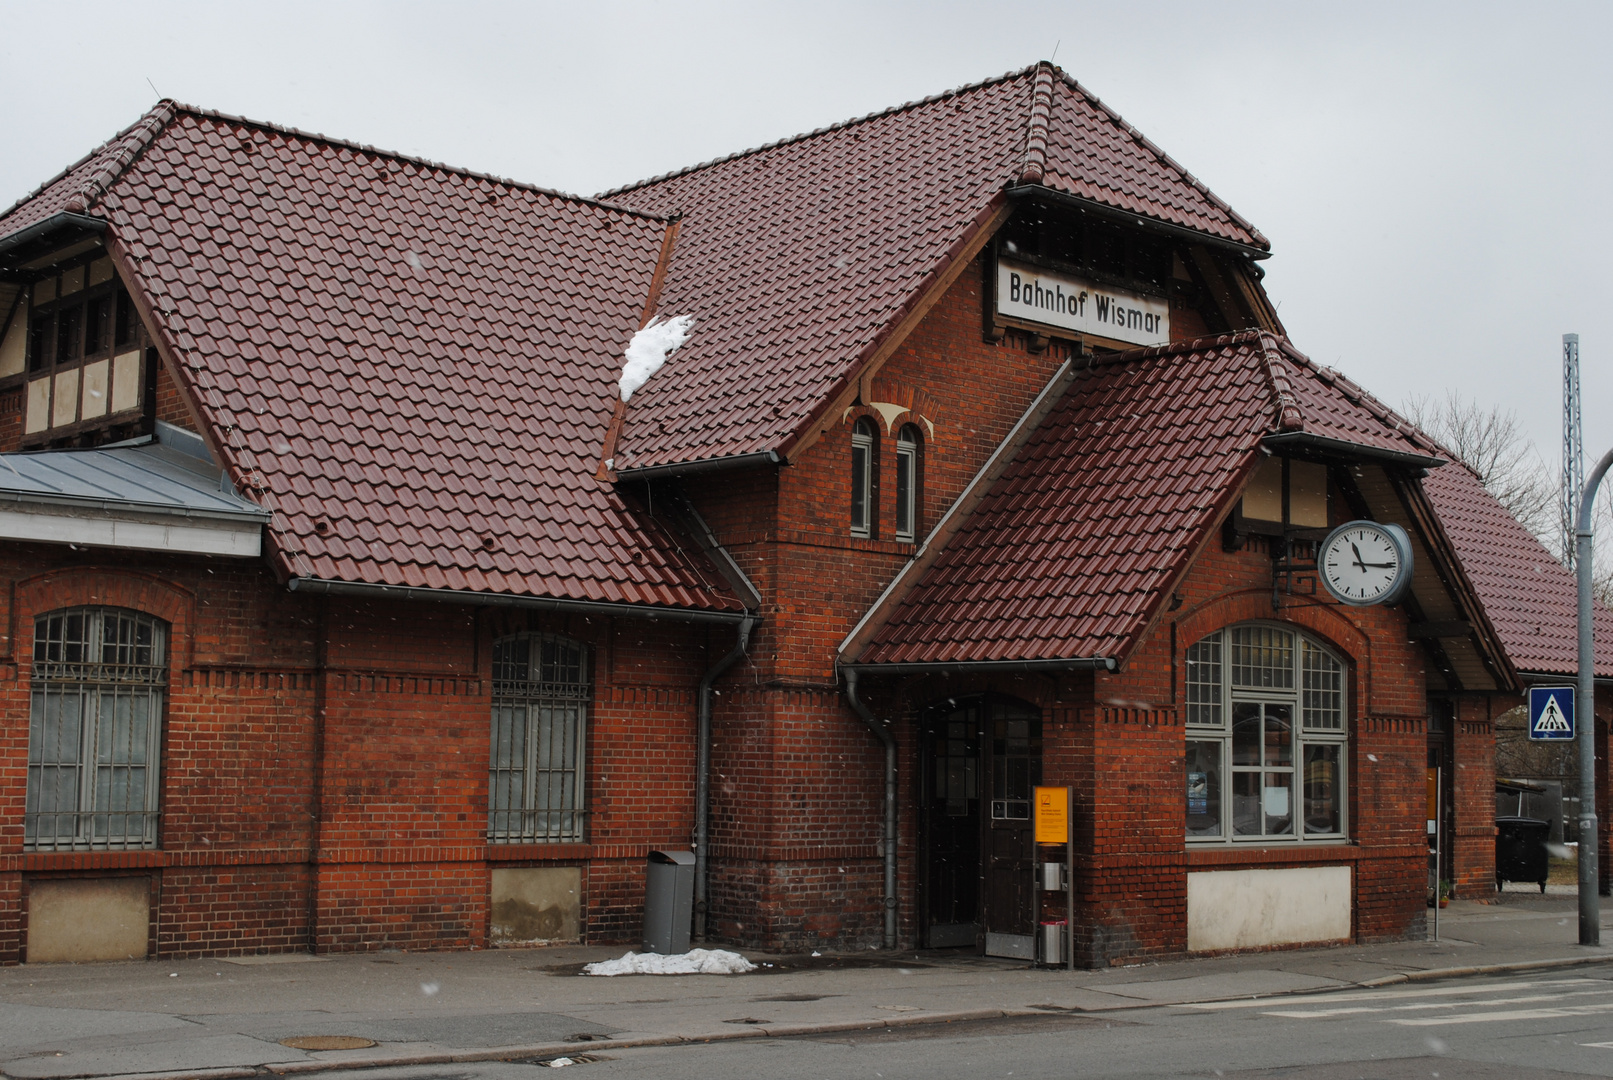 Bahnhof Wismar